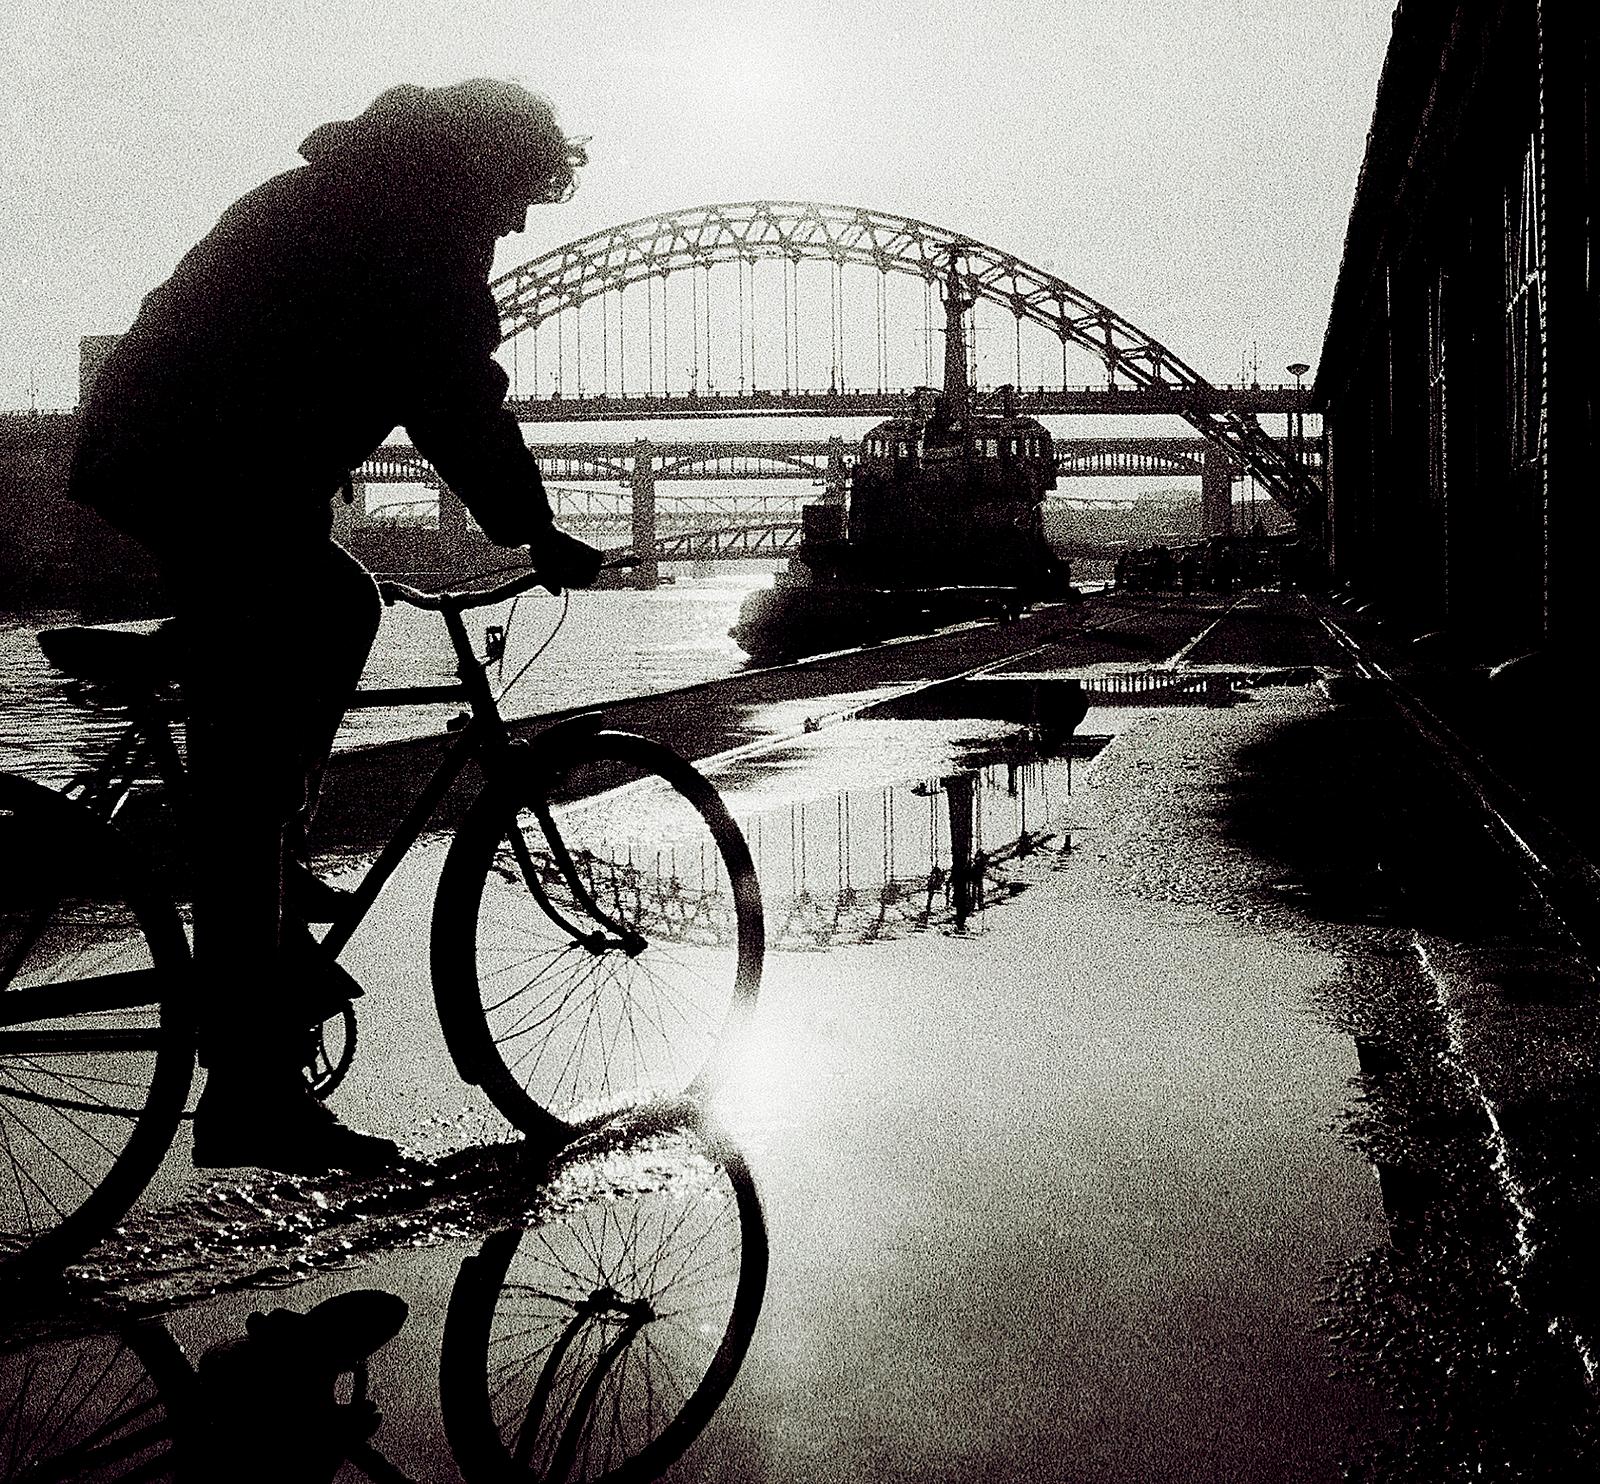 City Landscape print, black white, Contemporary, Analogue photo - Newcastle  - Black Landscape Photograph by Ian Sanderson